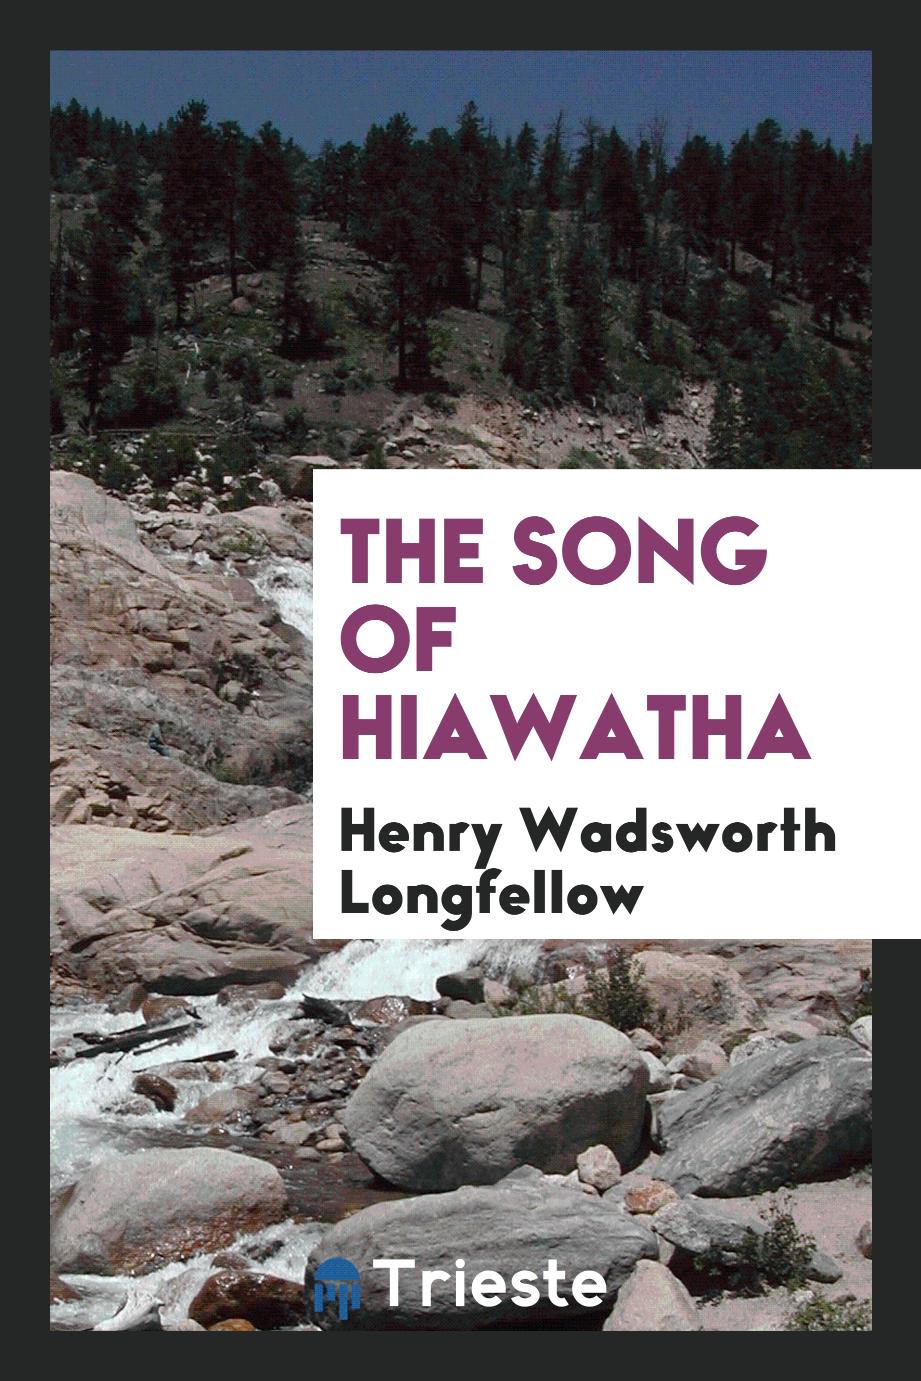 The song of Hiawatha